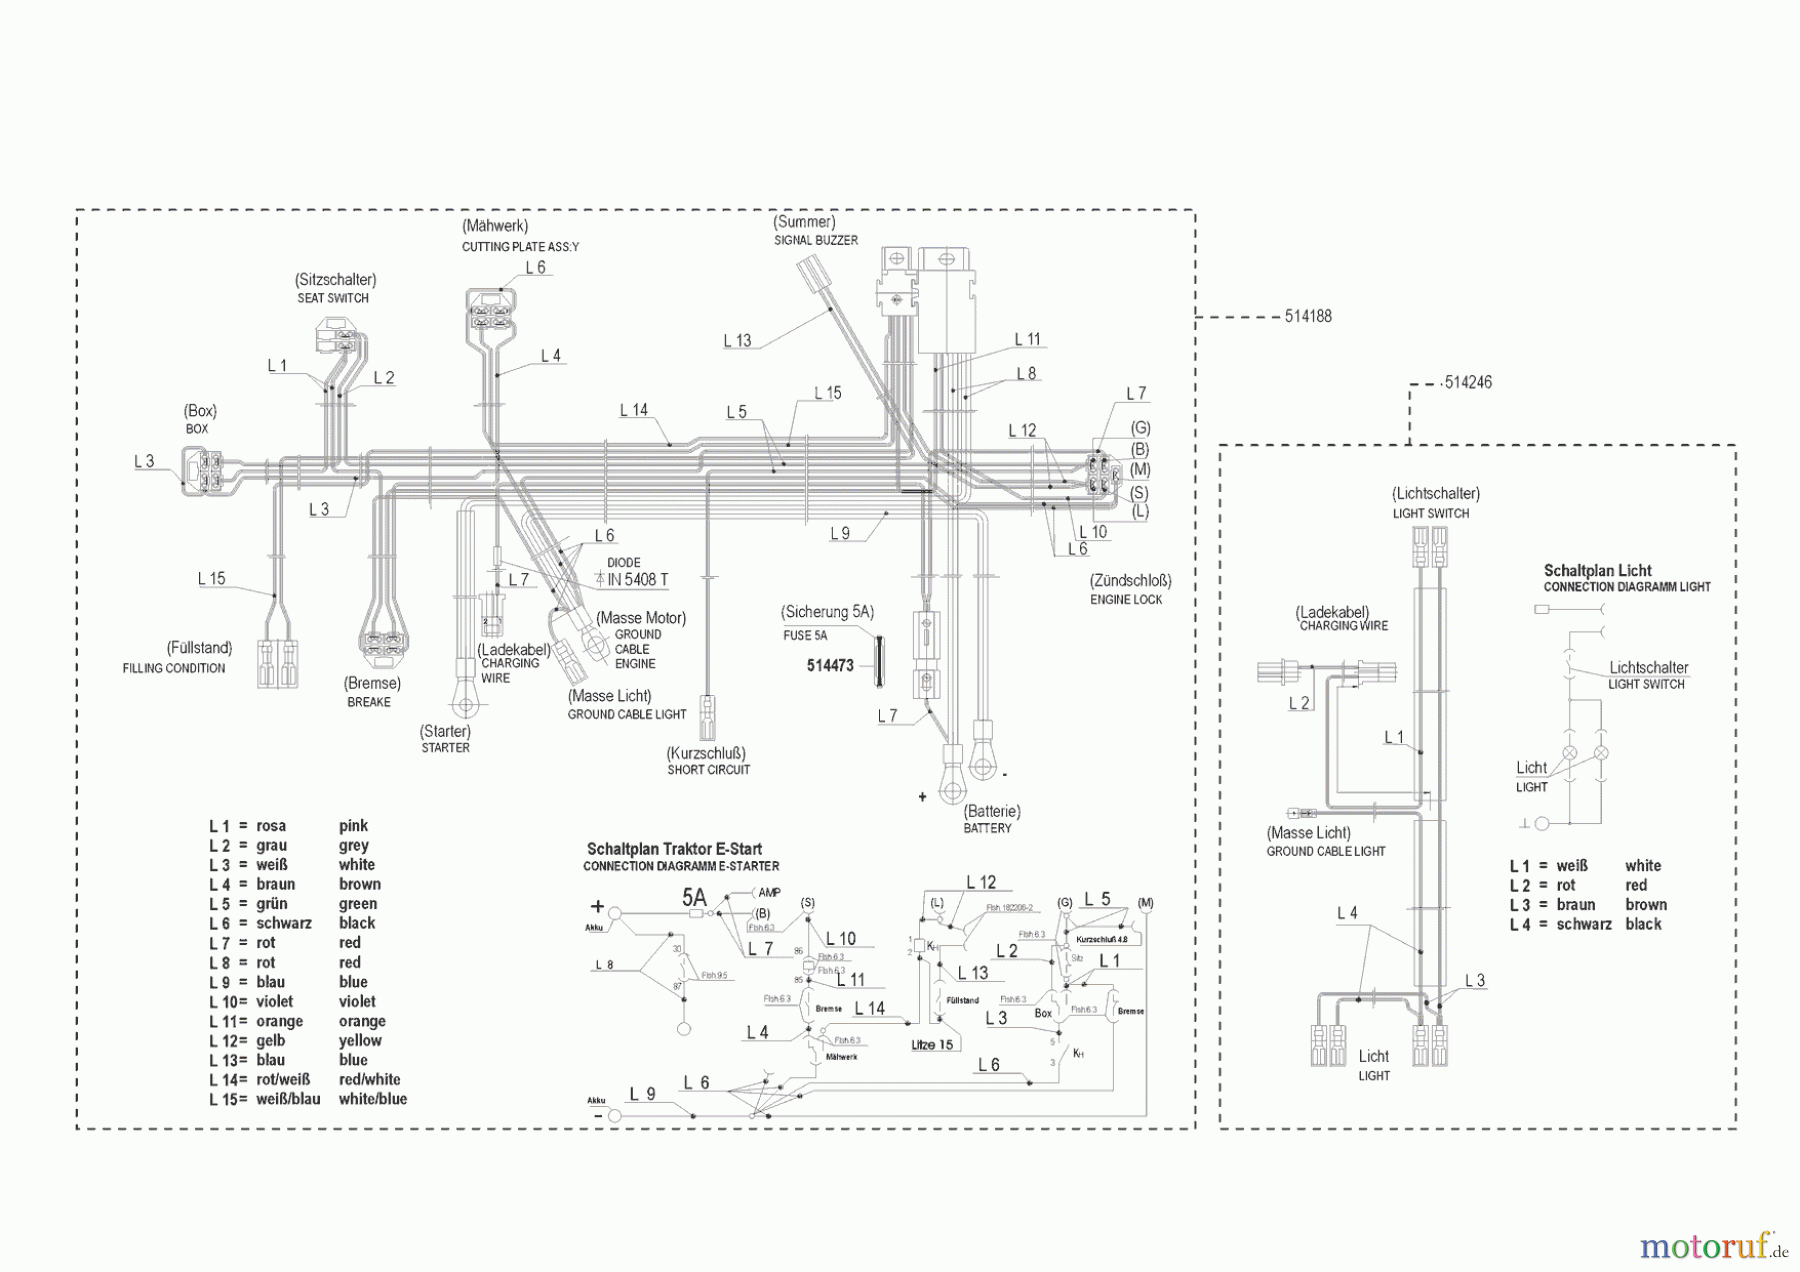  AL-KO Gartentechnik Rasentraktor T 11- 85 Hochf. ab 06/1998 Seite 8